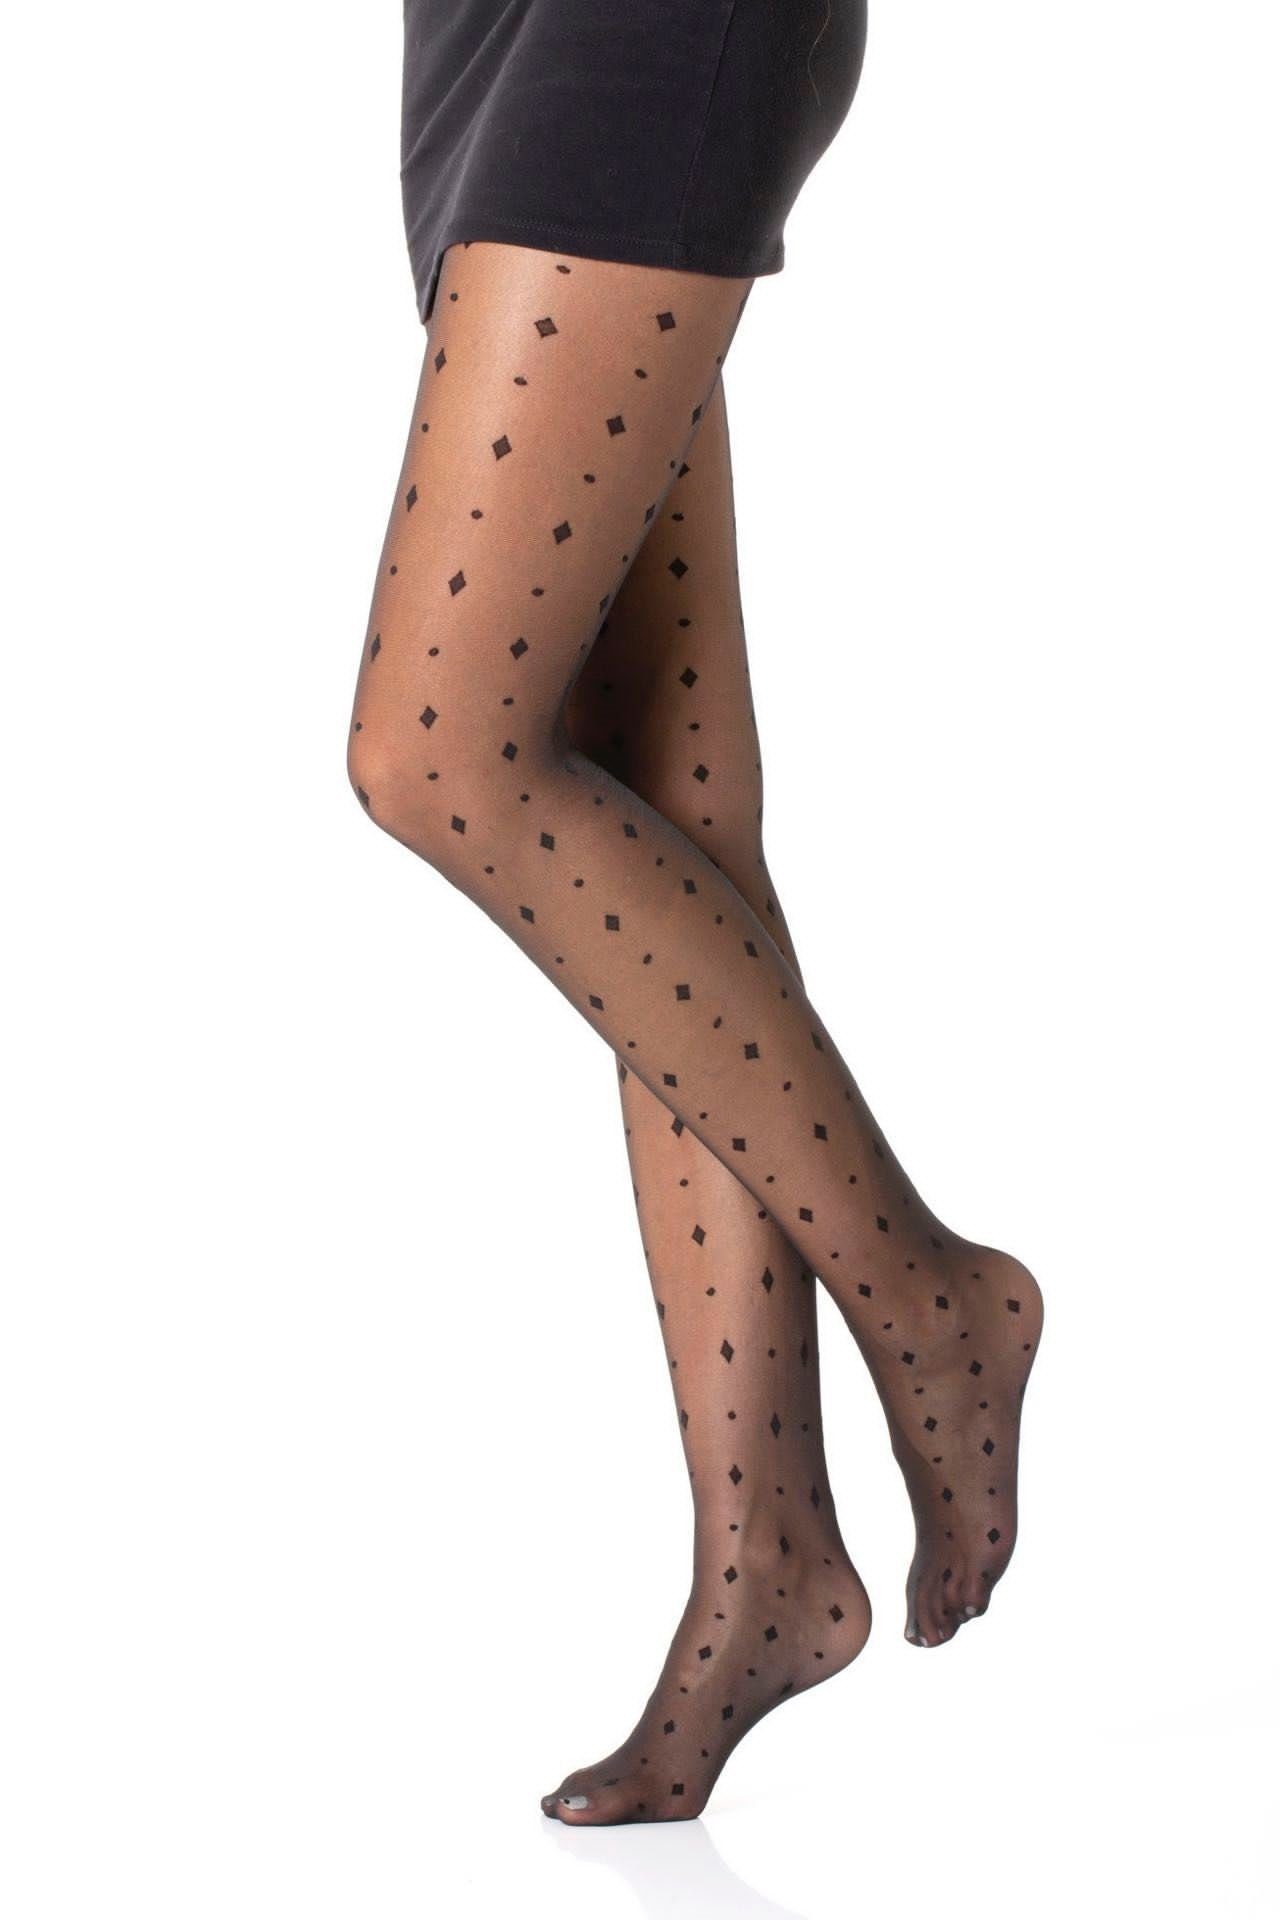 40 Nero Feinstrumpfhose Muster Damen Frauen mit schwarz Strumpfhose DEN cofi1453 Hose Socken